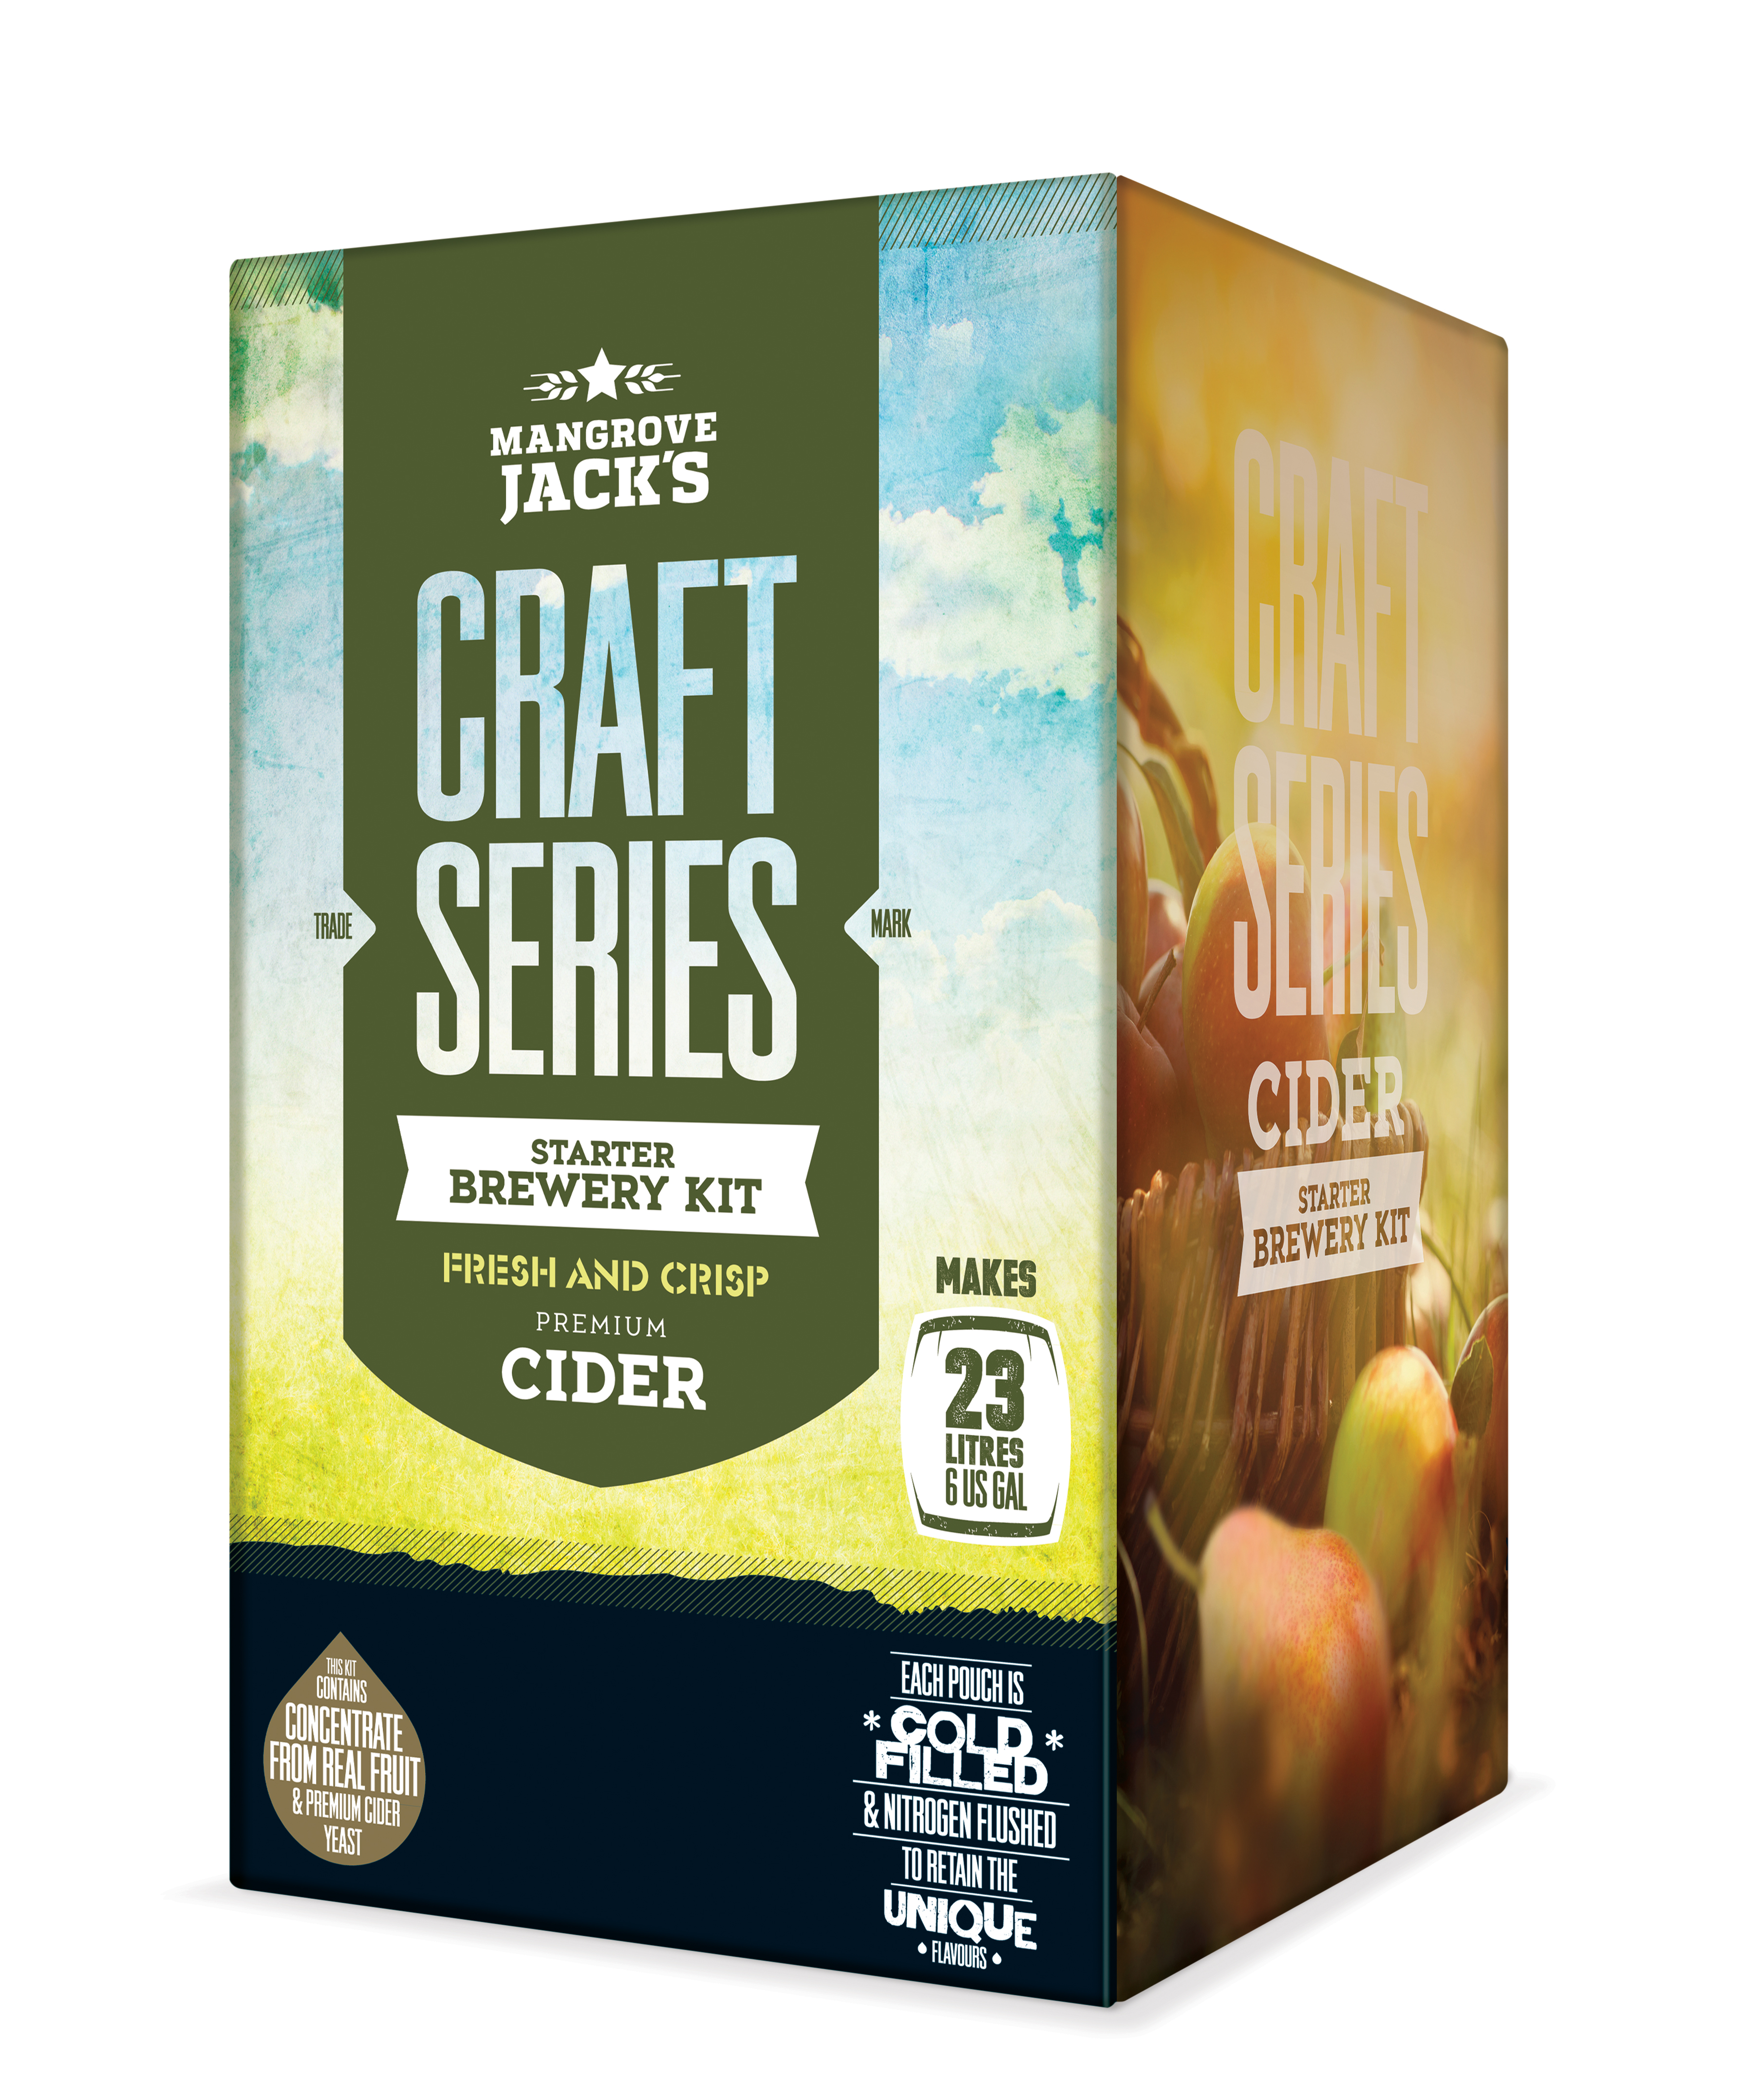 Mangrove Jacks Craft Series Apple Cider Starter Brewery Kit